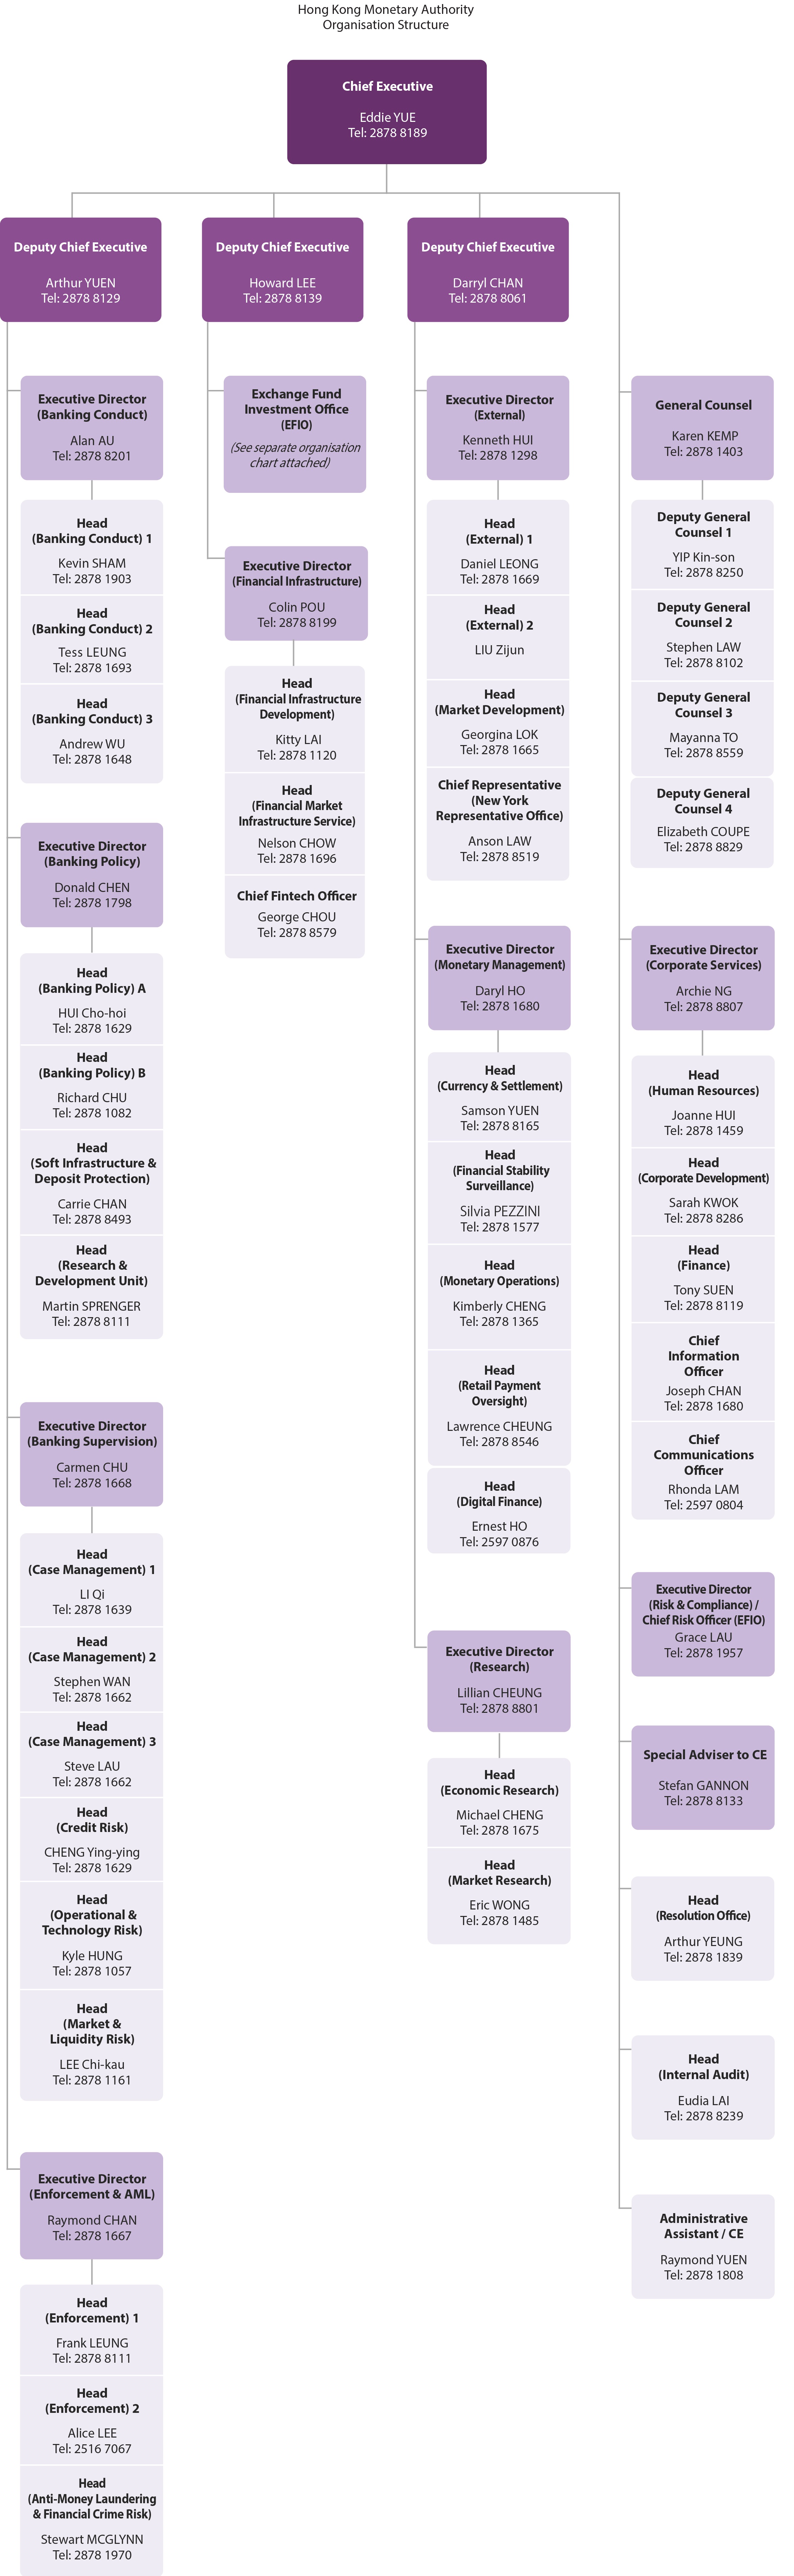 Organisation Chart
